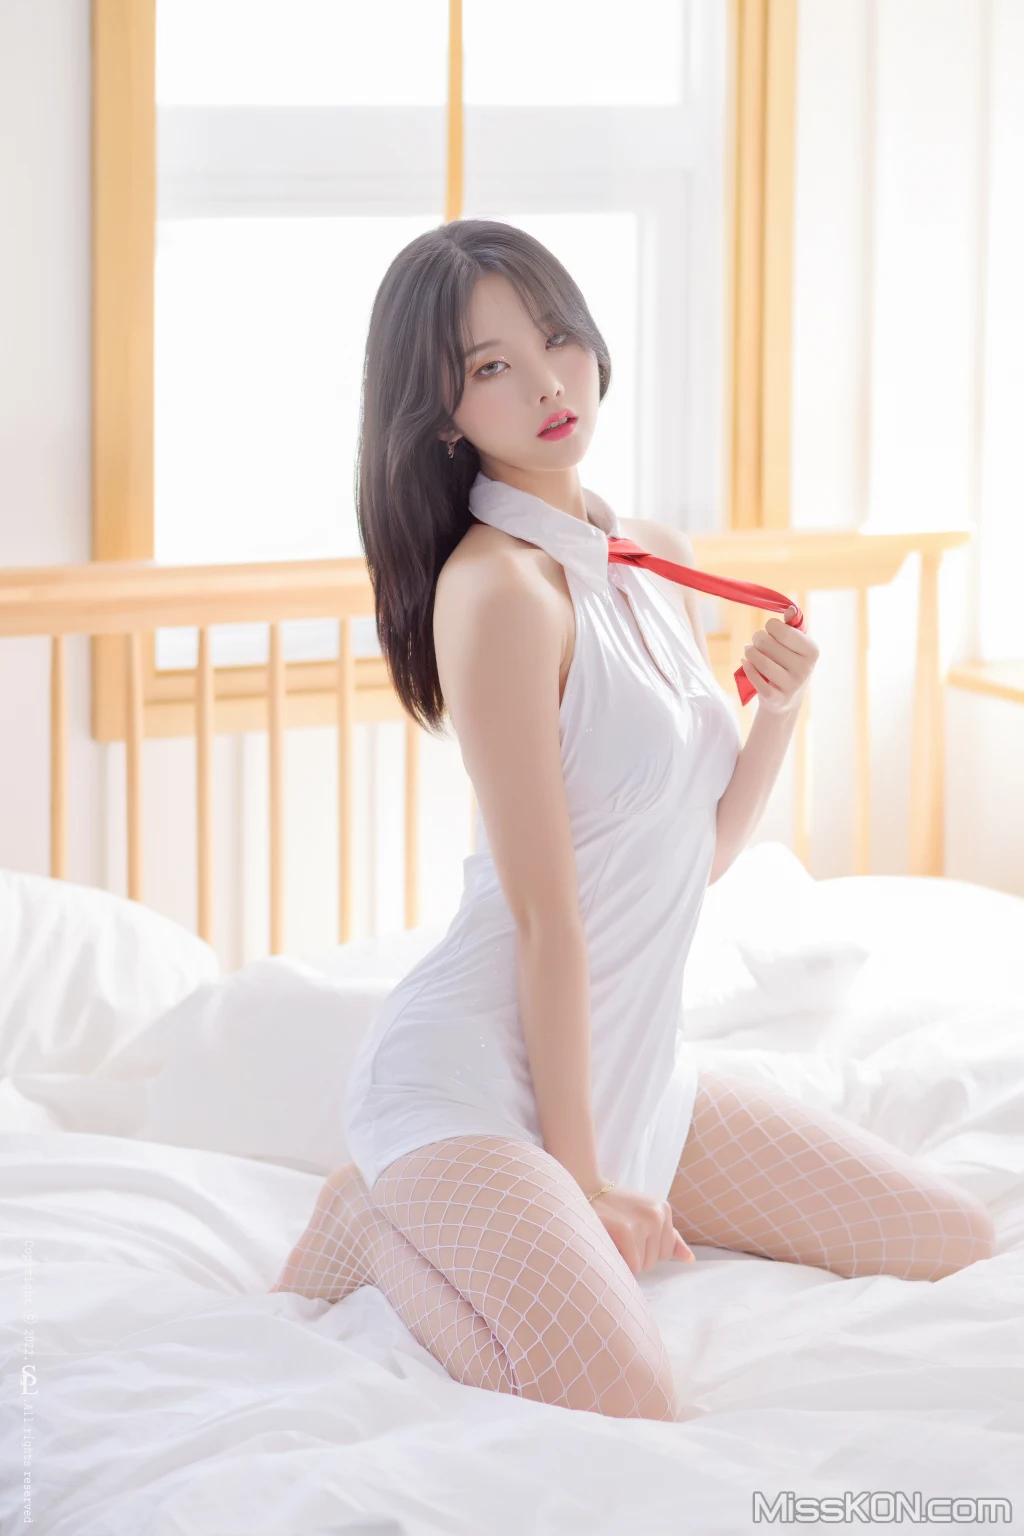 SAINT Photolife – Yuna (유나): Vol.42 Afternoon Sunshine (70 photos)